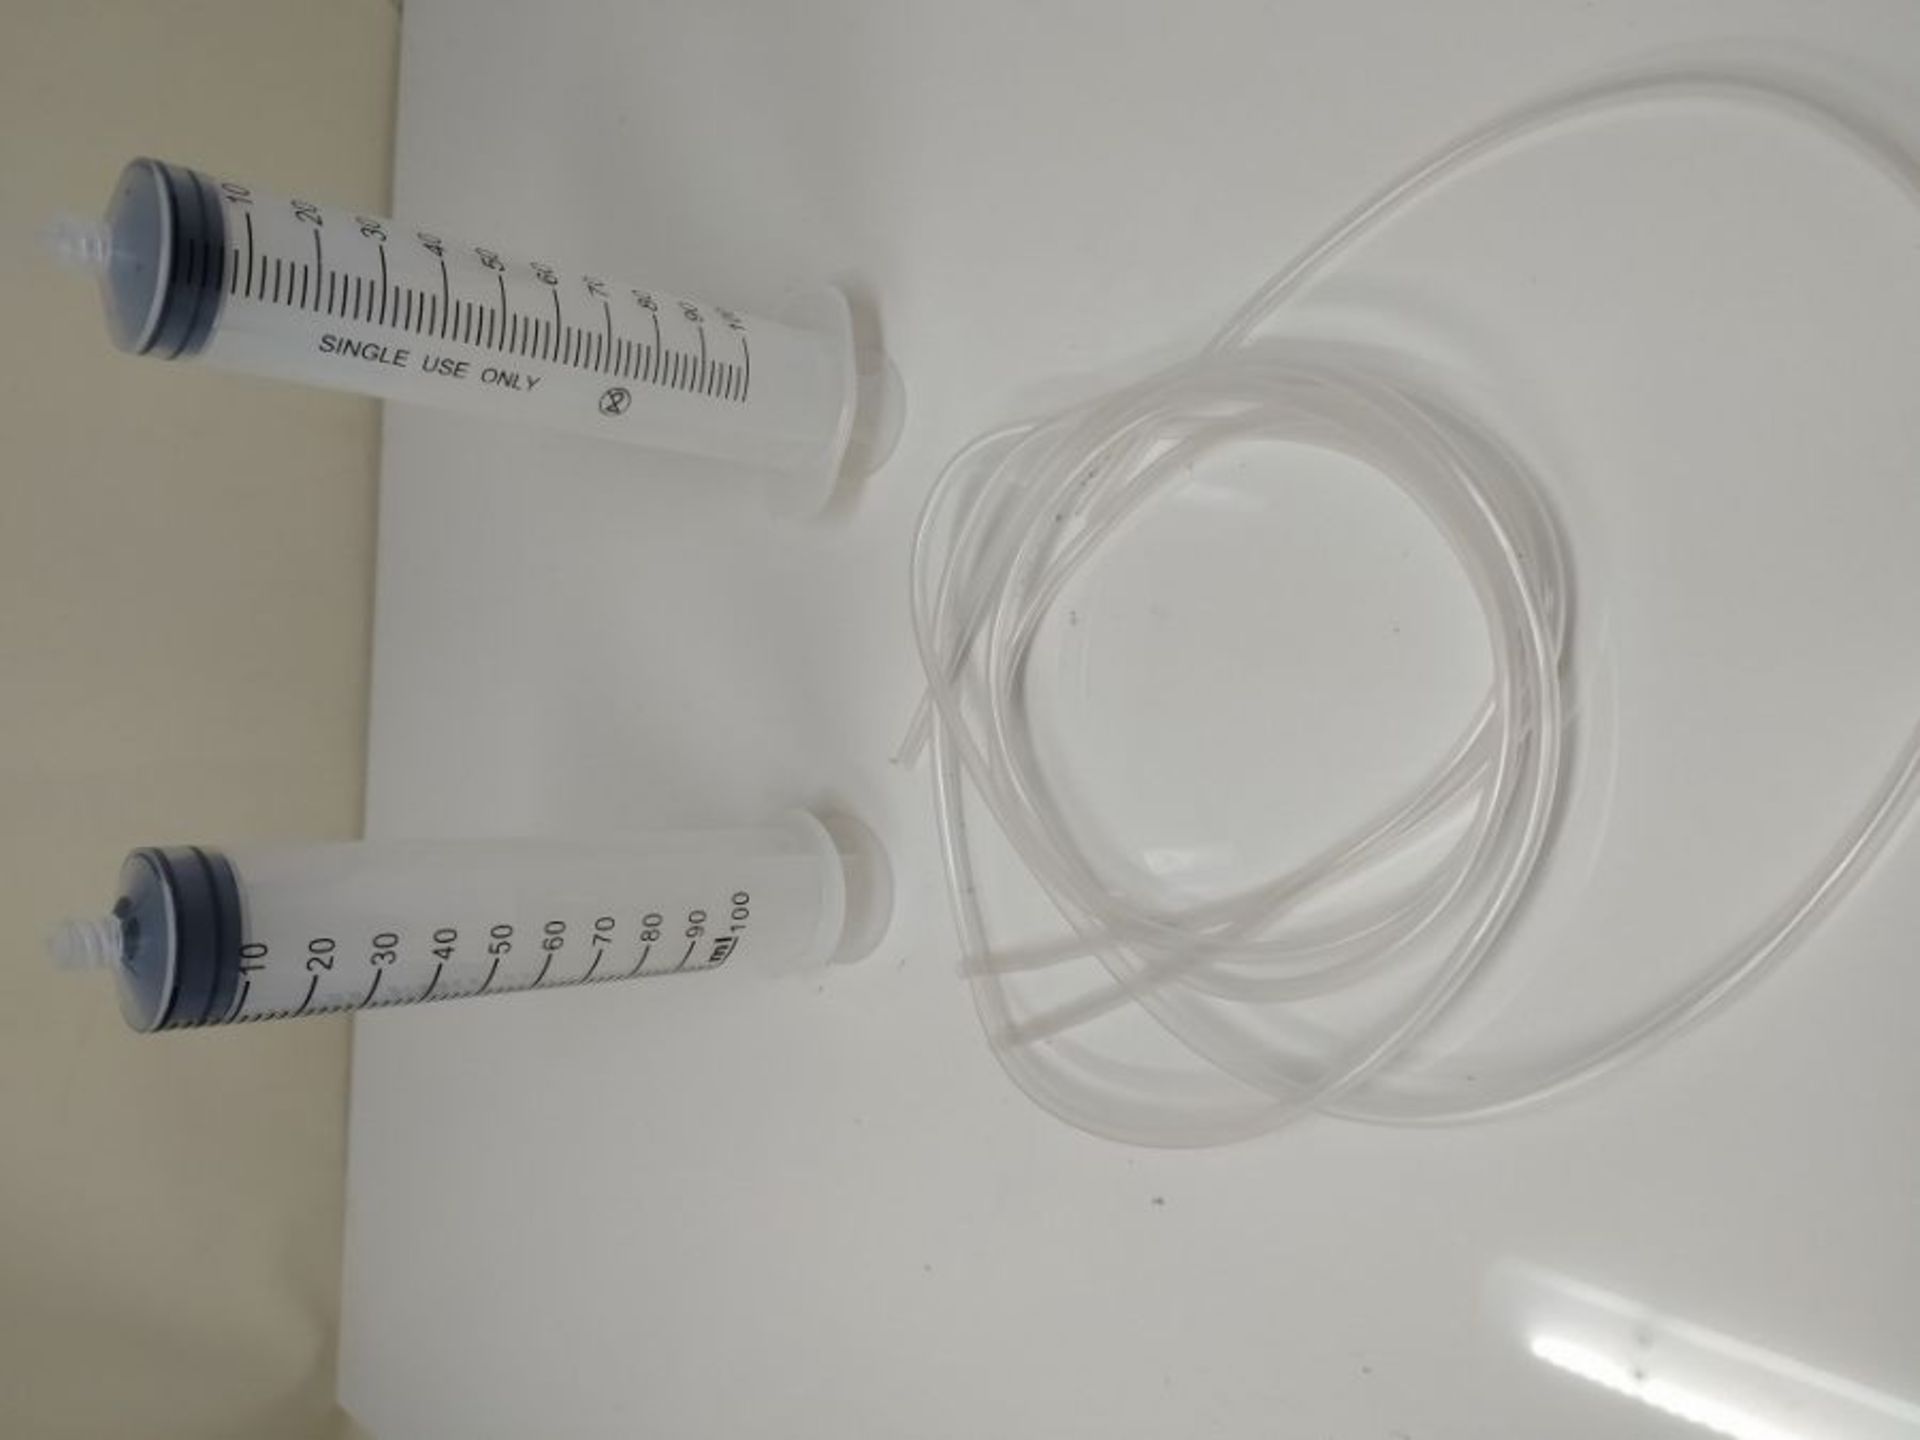 FEIGO 3Pack 100ml Large Plastic Syringe with Handy Plastic Tubing and Needle, Dispensi - Image 2 of 2